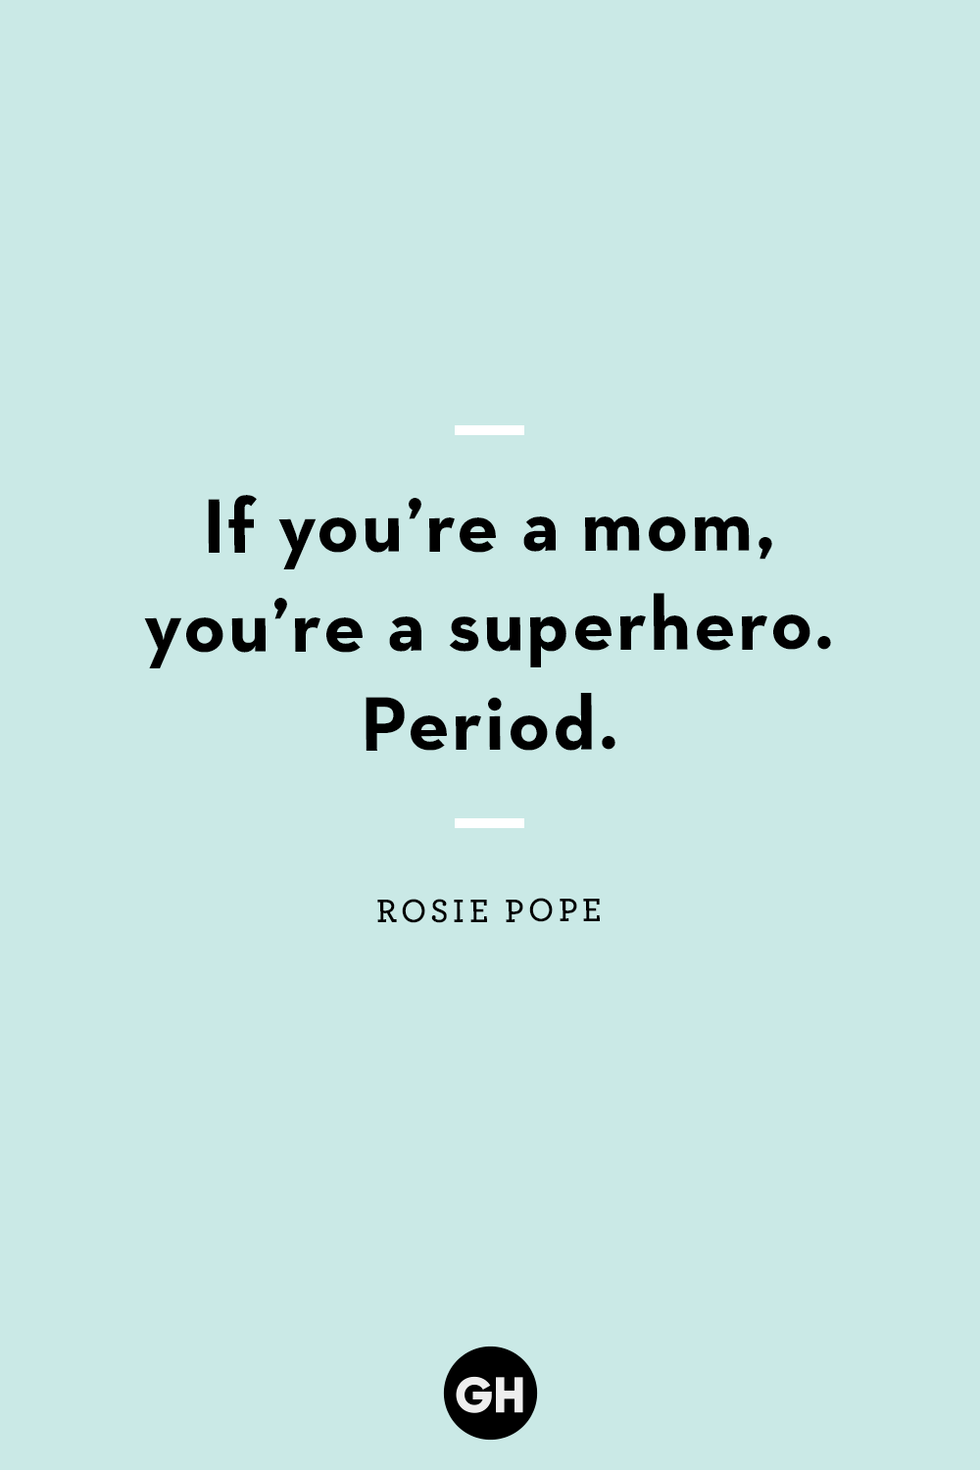 if you're a mom, you're a superhero period